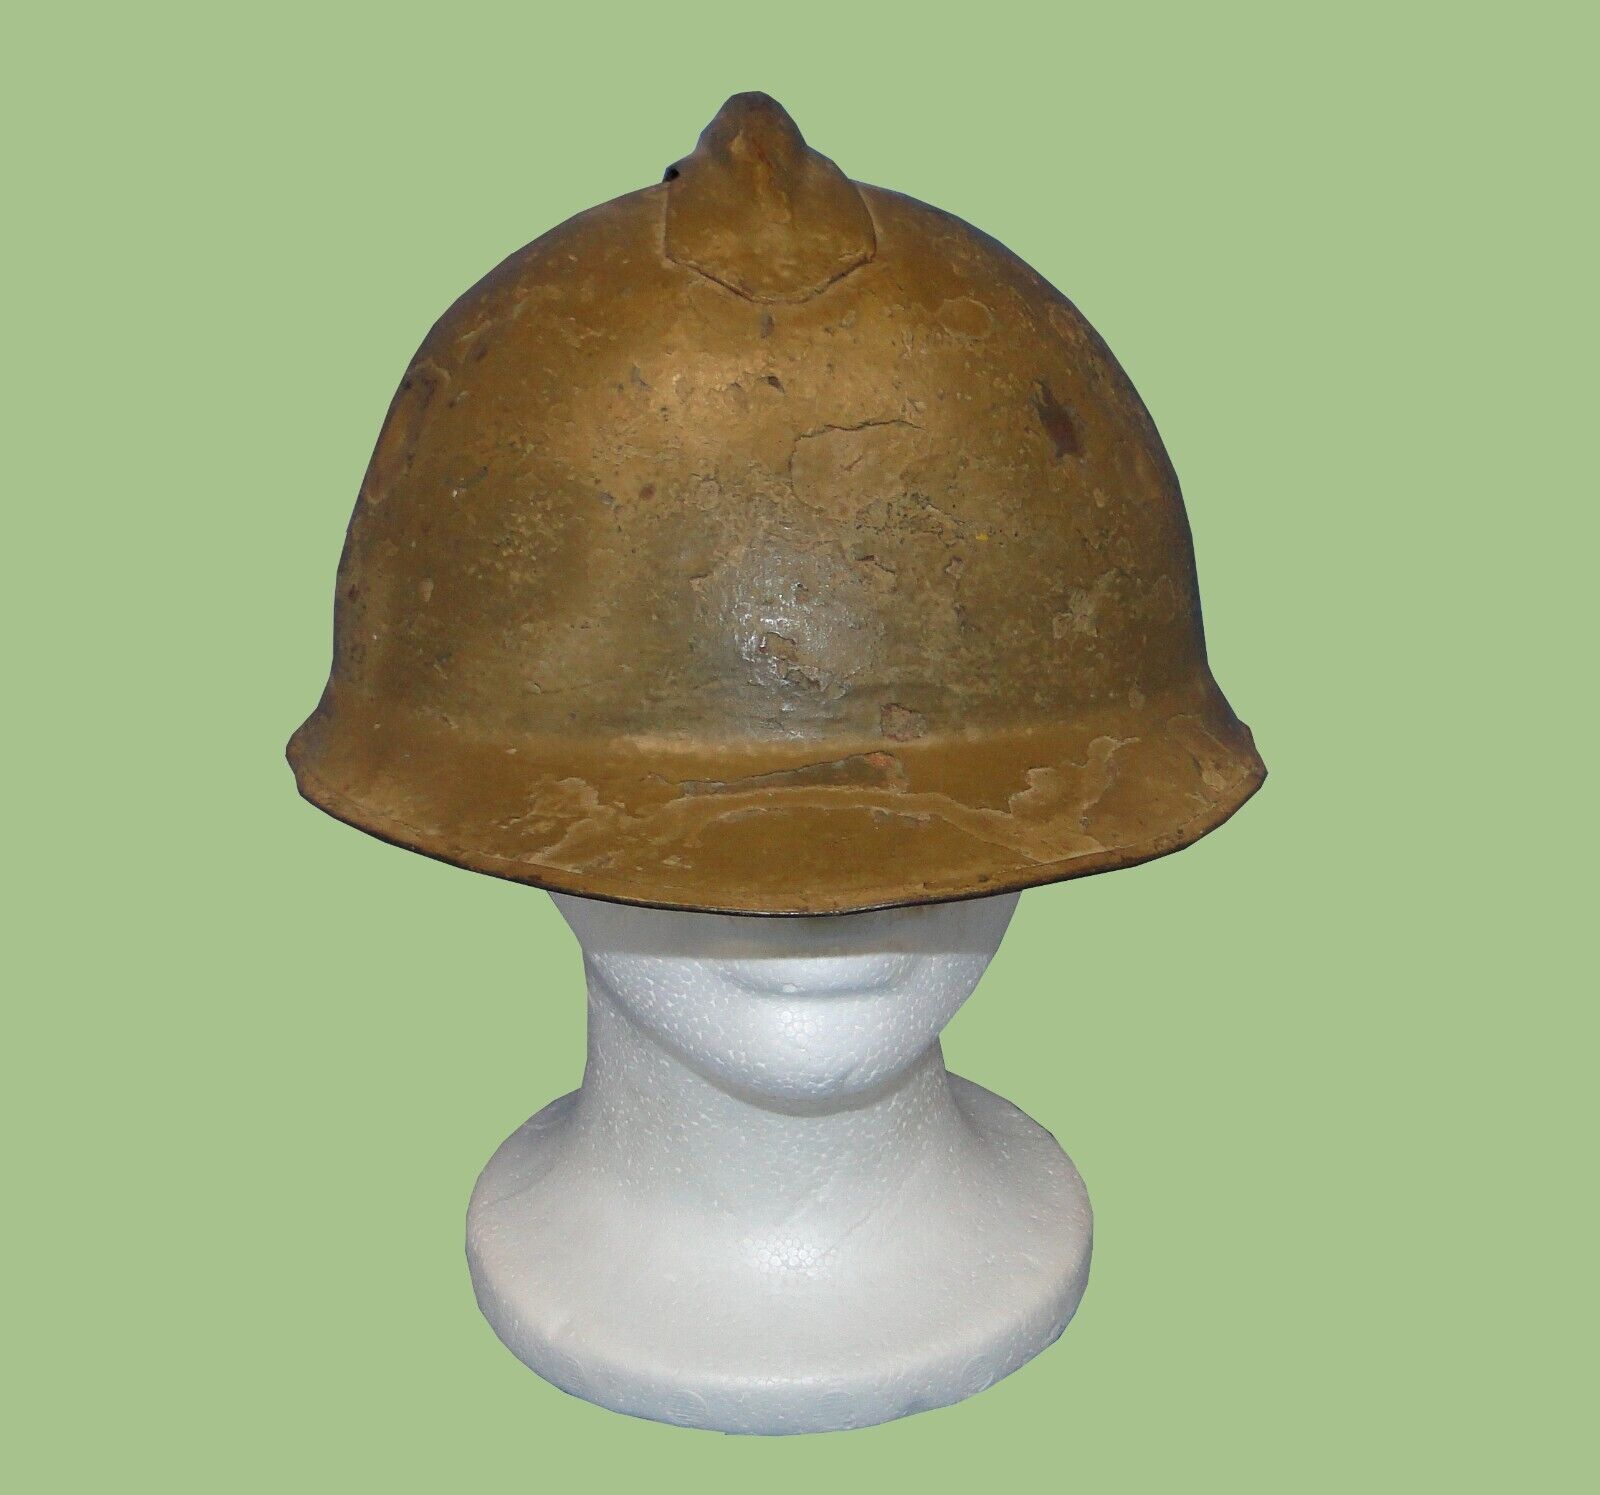 Italian Army Adrian M-1923 Helmet (4912)